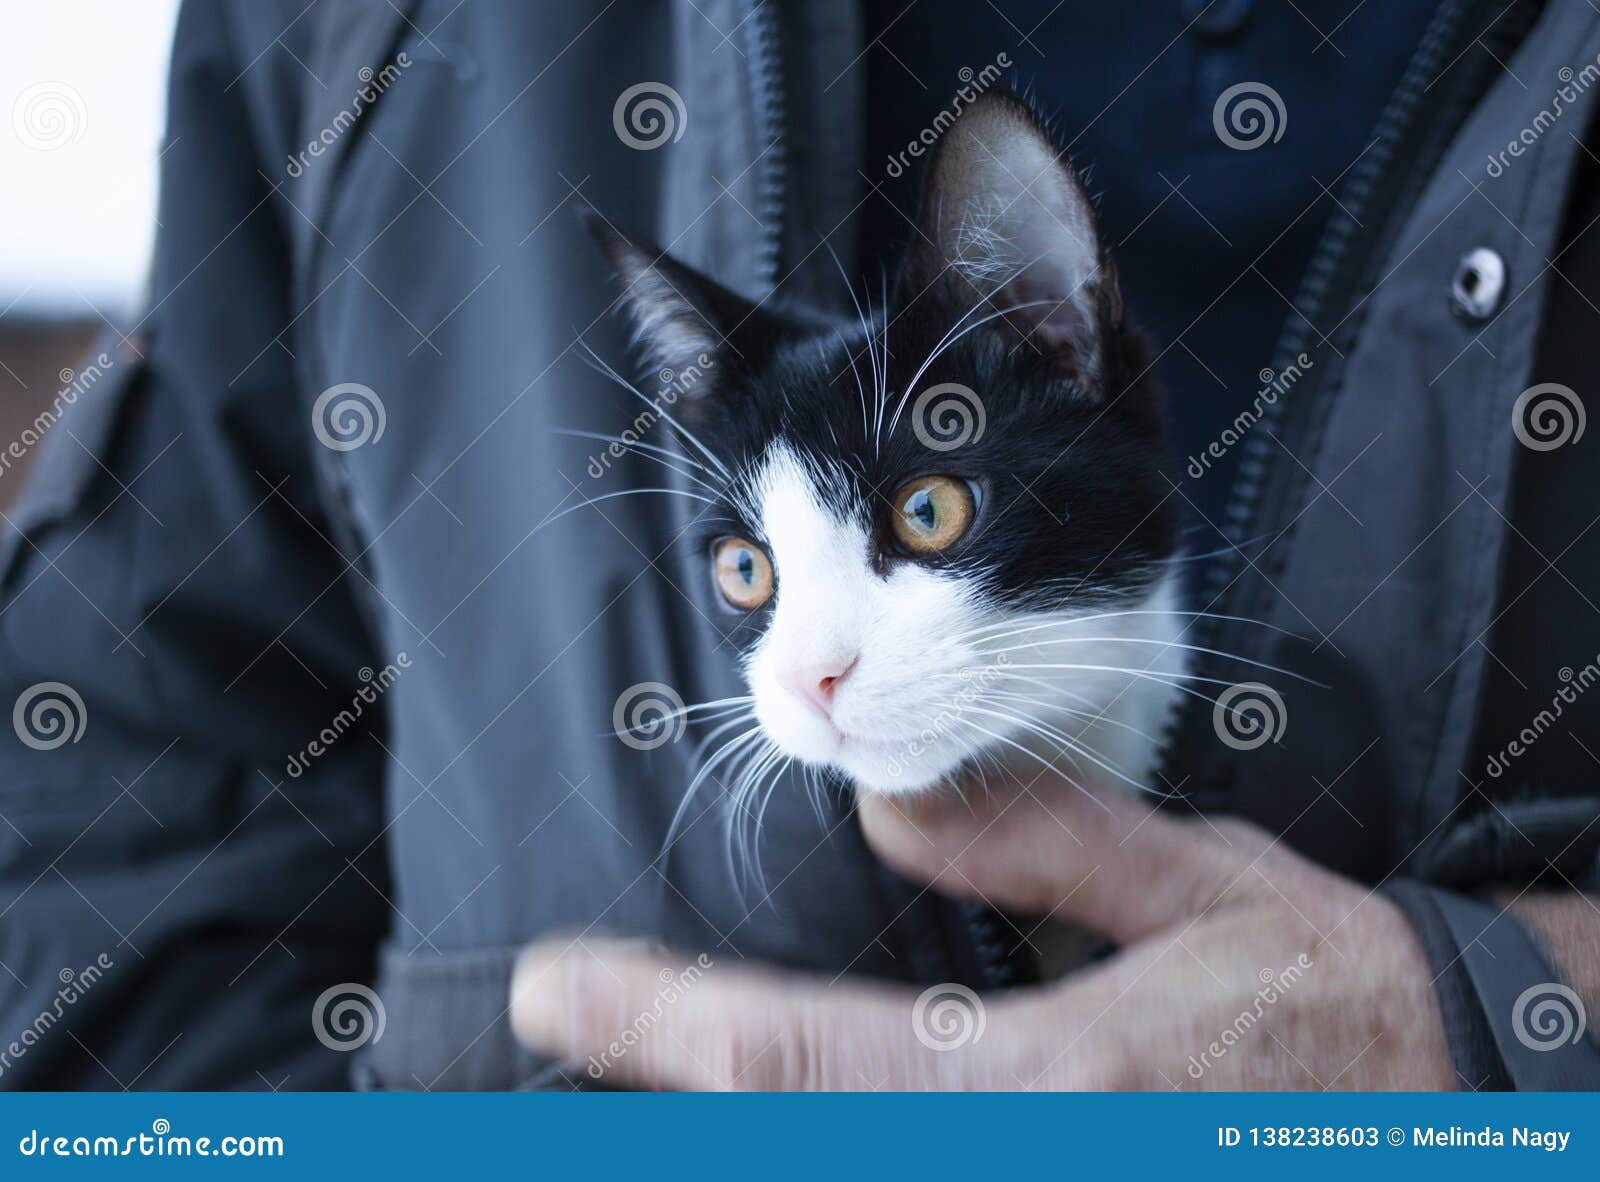 Man Holding Cute Little Cat Under Winter Coat Stock Image - Image